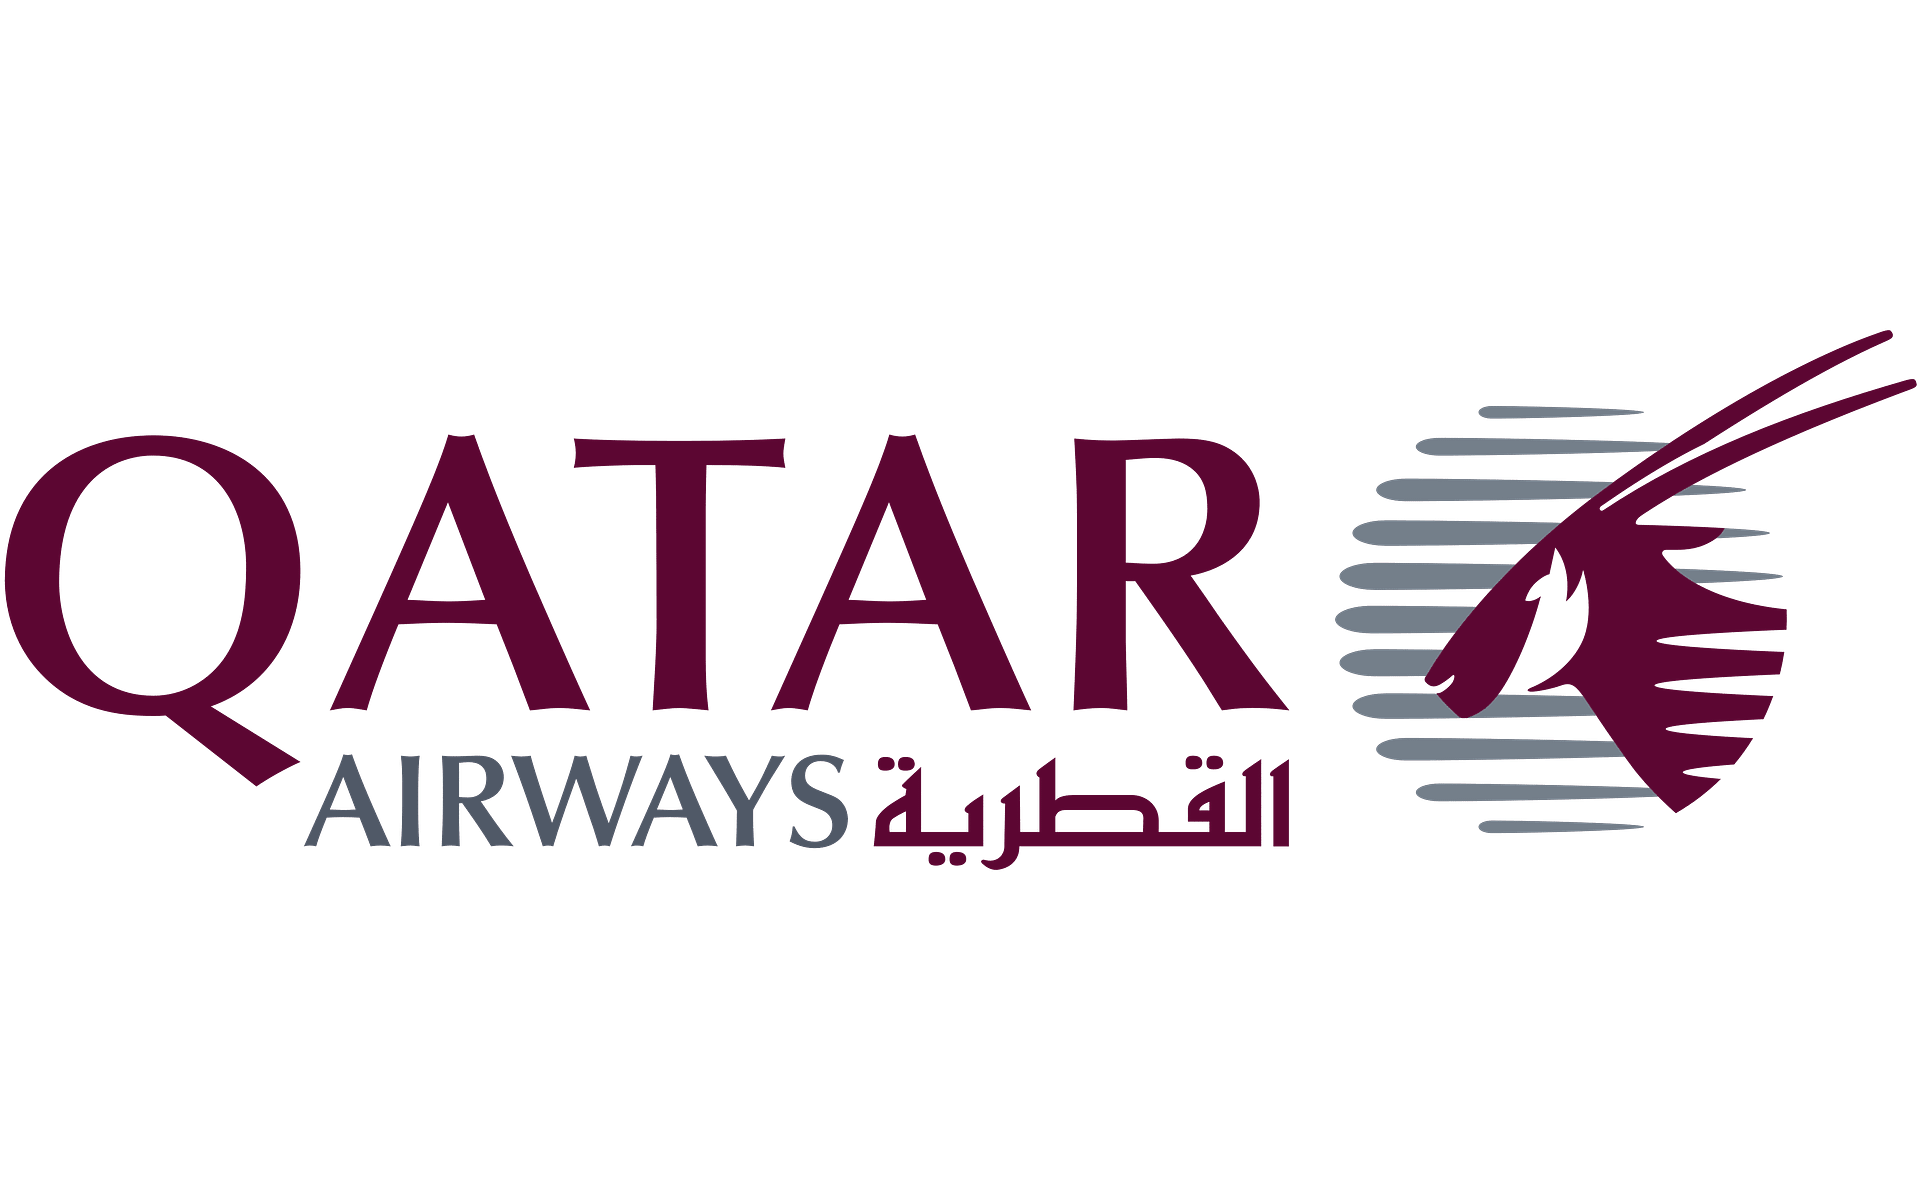 Qatar Airways Airlines | Phone Number 1-877-777-2827